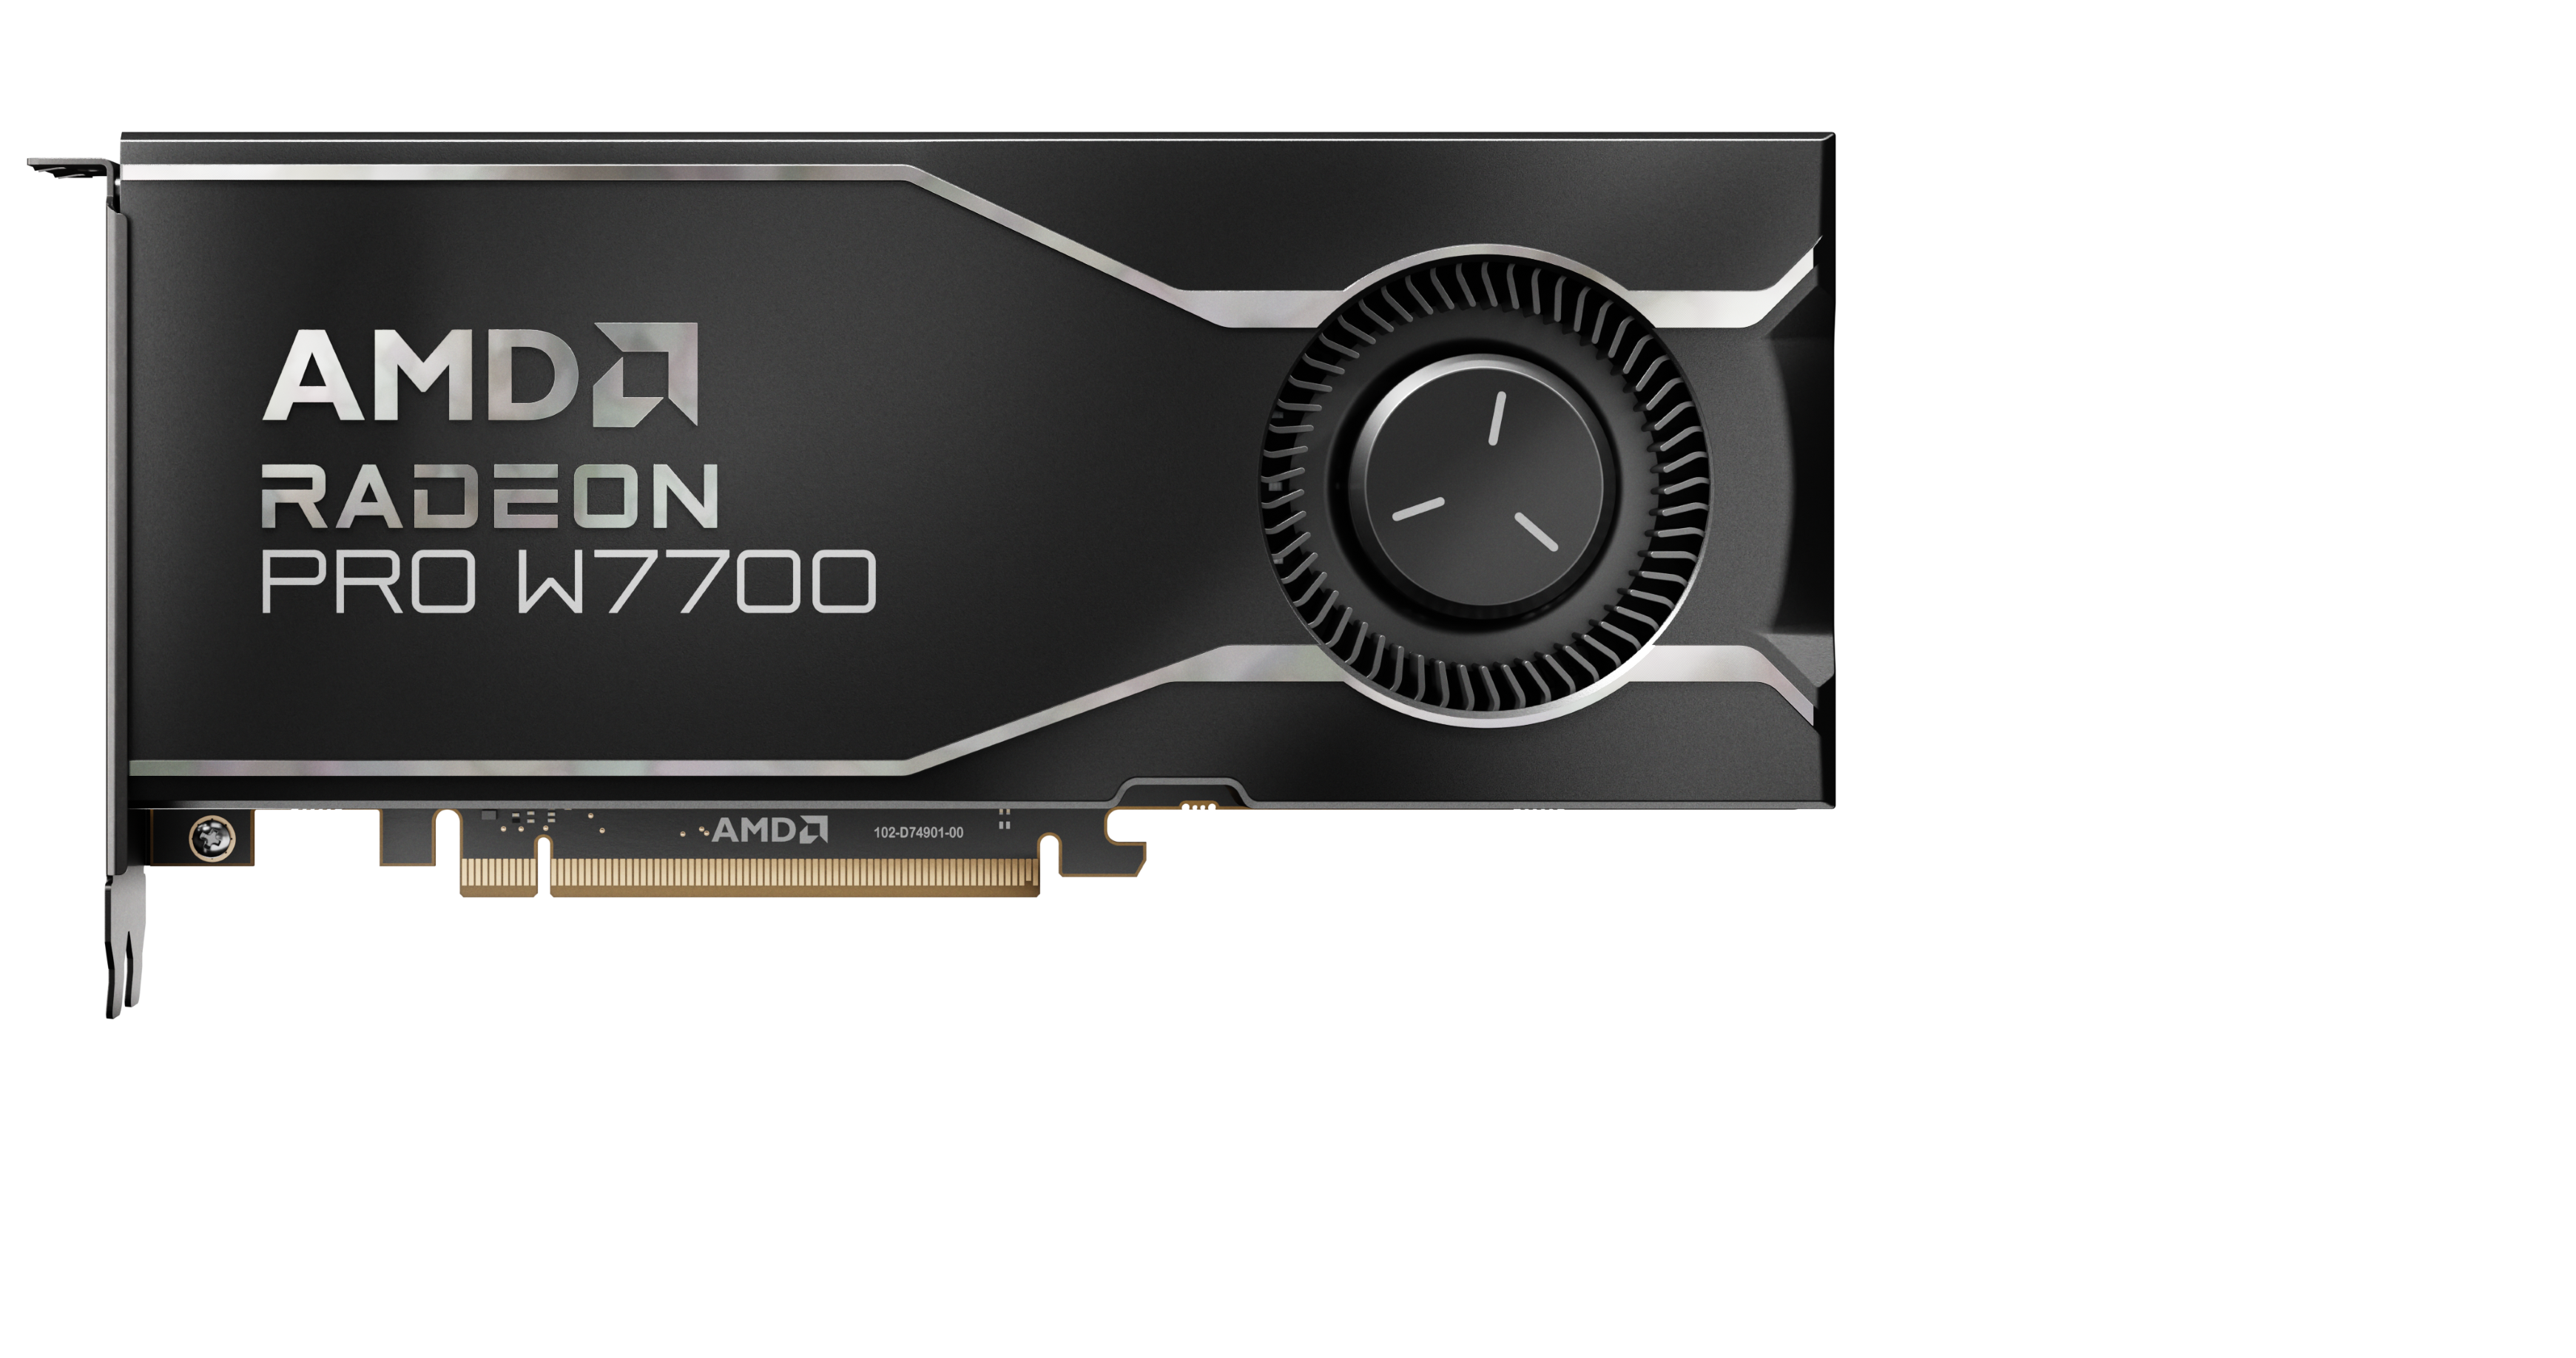 AMD Radeon™ PRO W7700 workstation graphics card